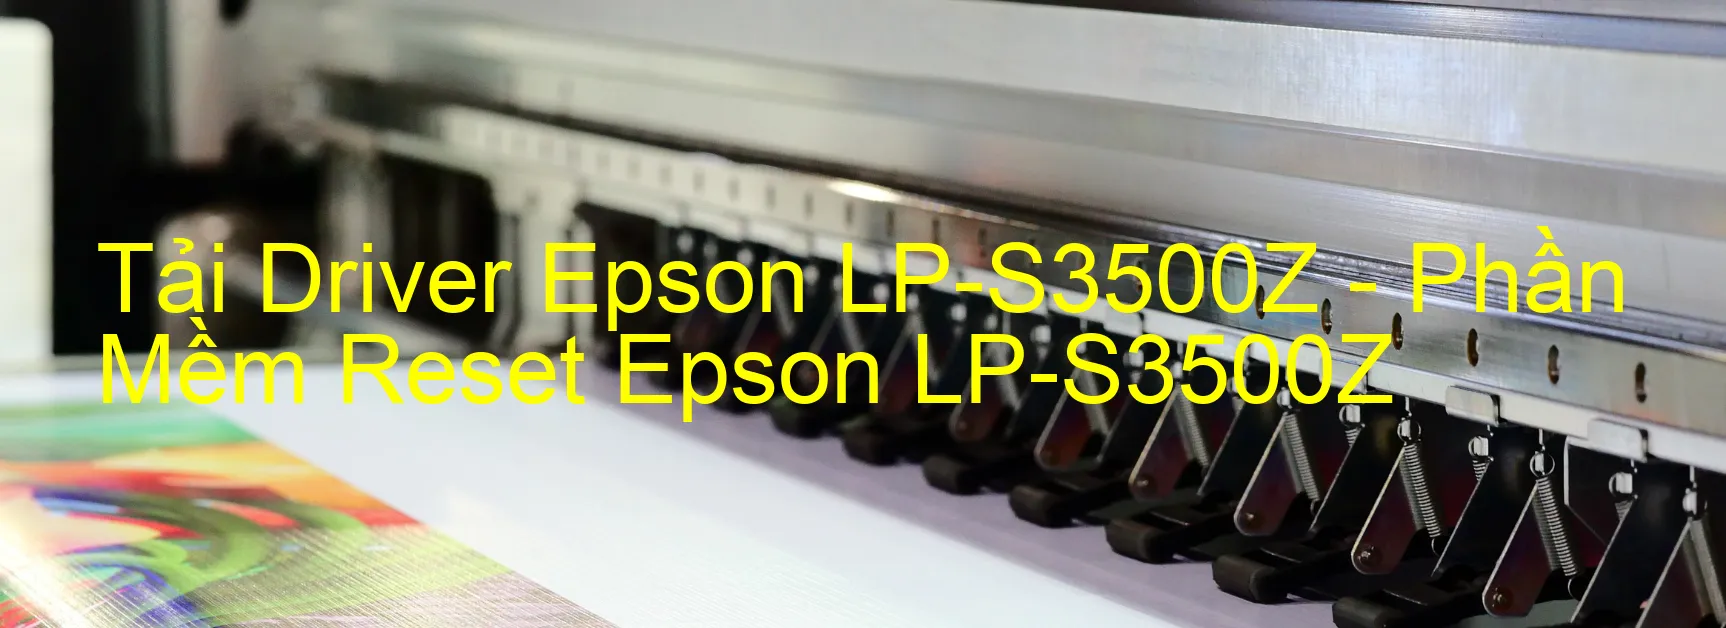 Driver Epson LP-S3500Z, Phần Mềm Reset Epson LP-S3500Z